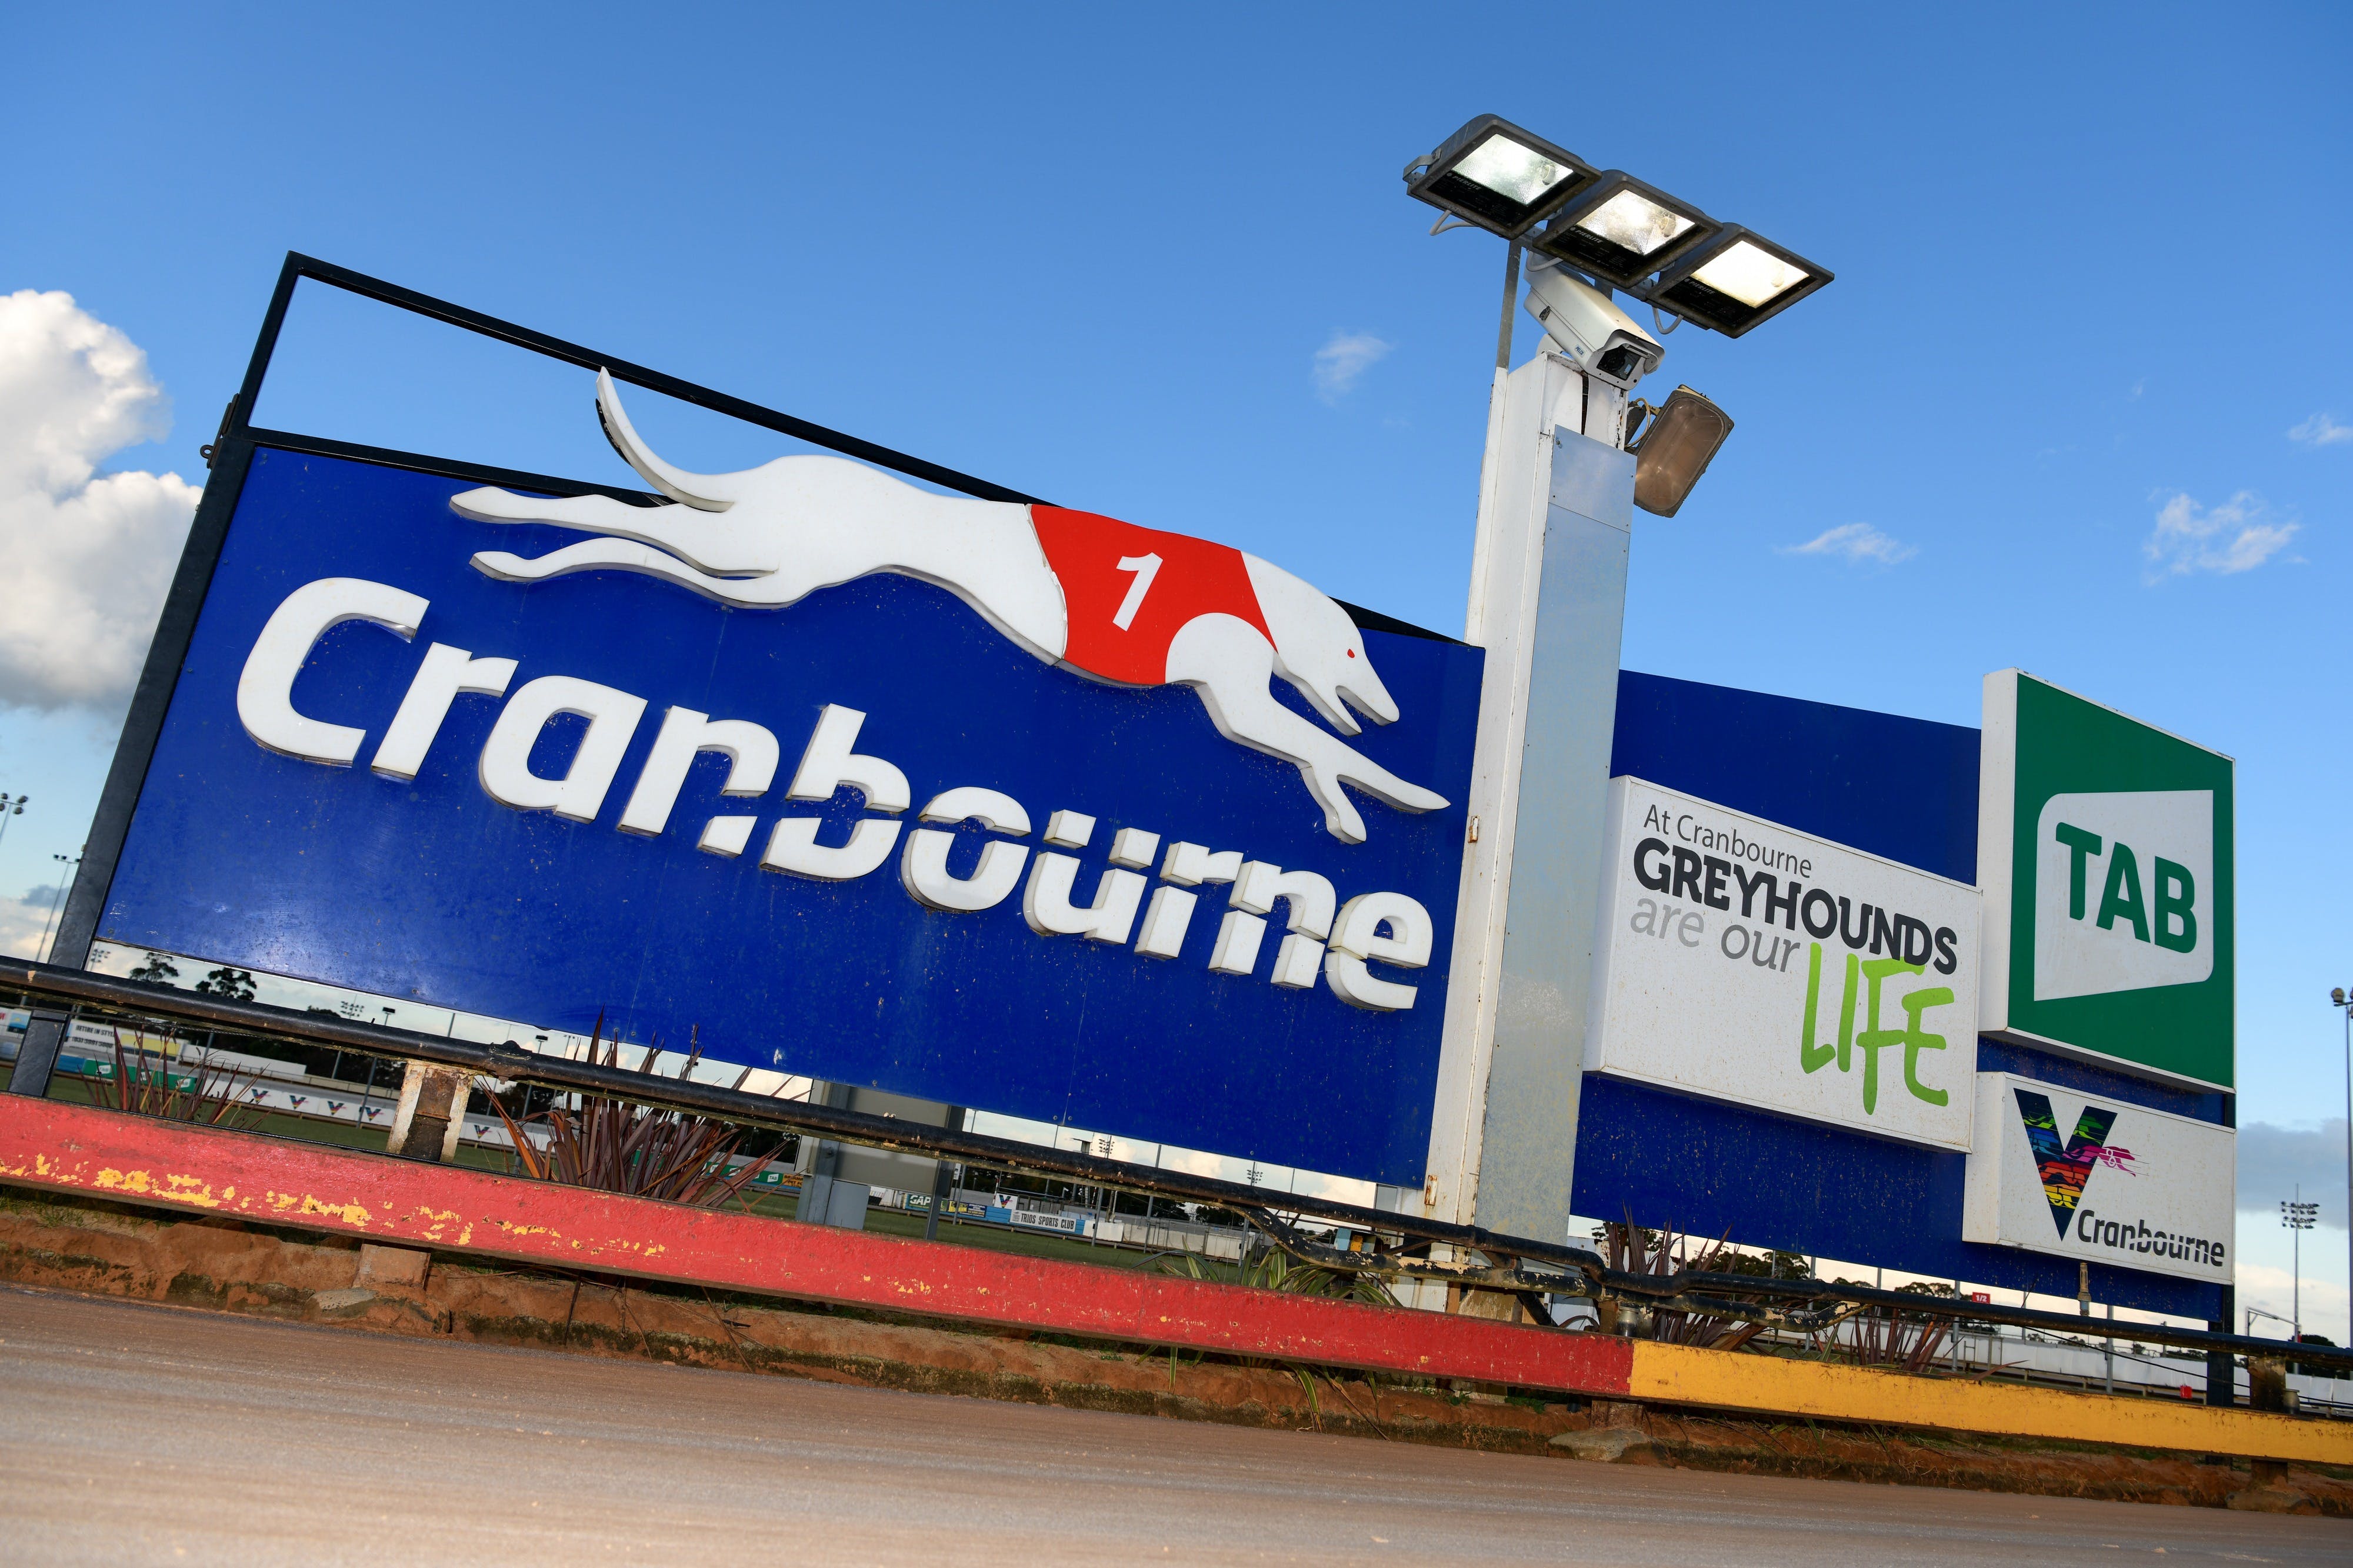 Cranbourne Greyhound Racing Club - New South Wales Tourism 